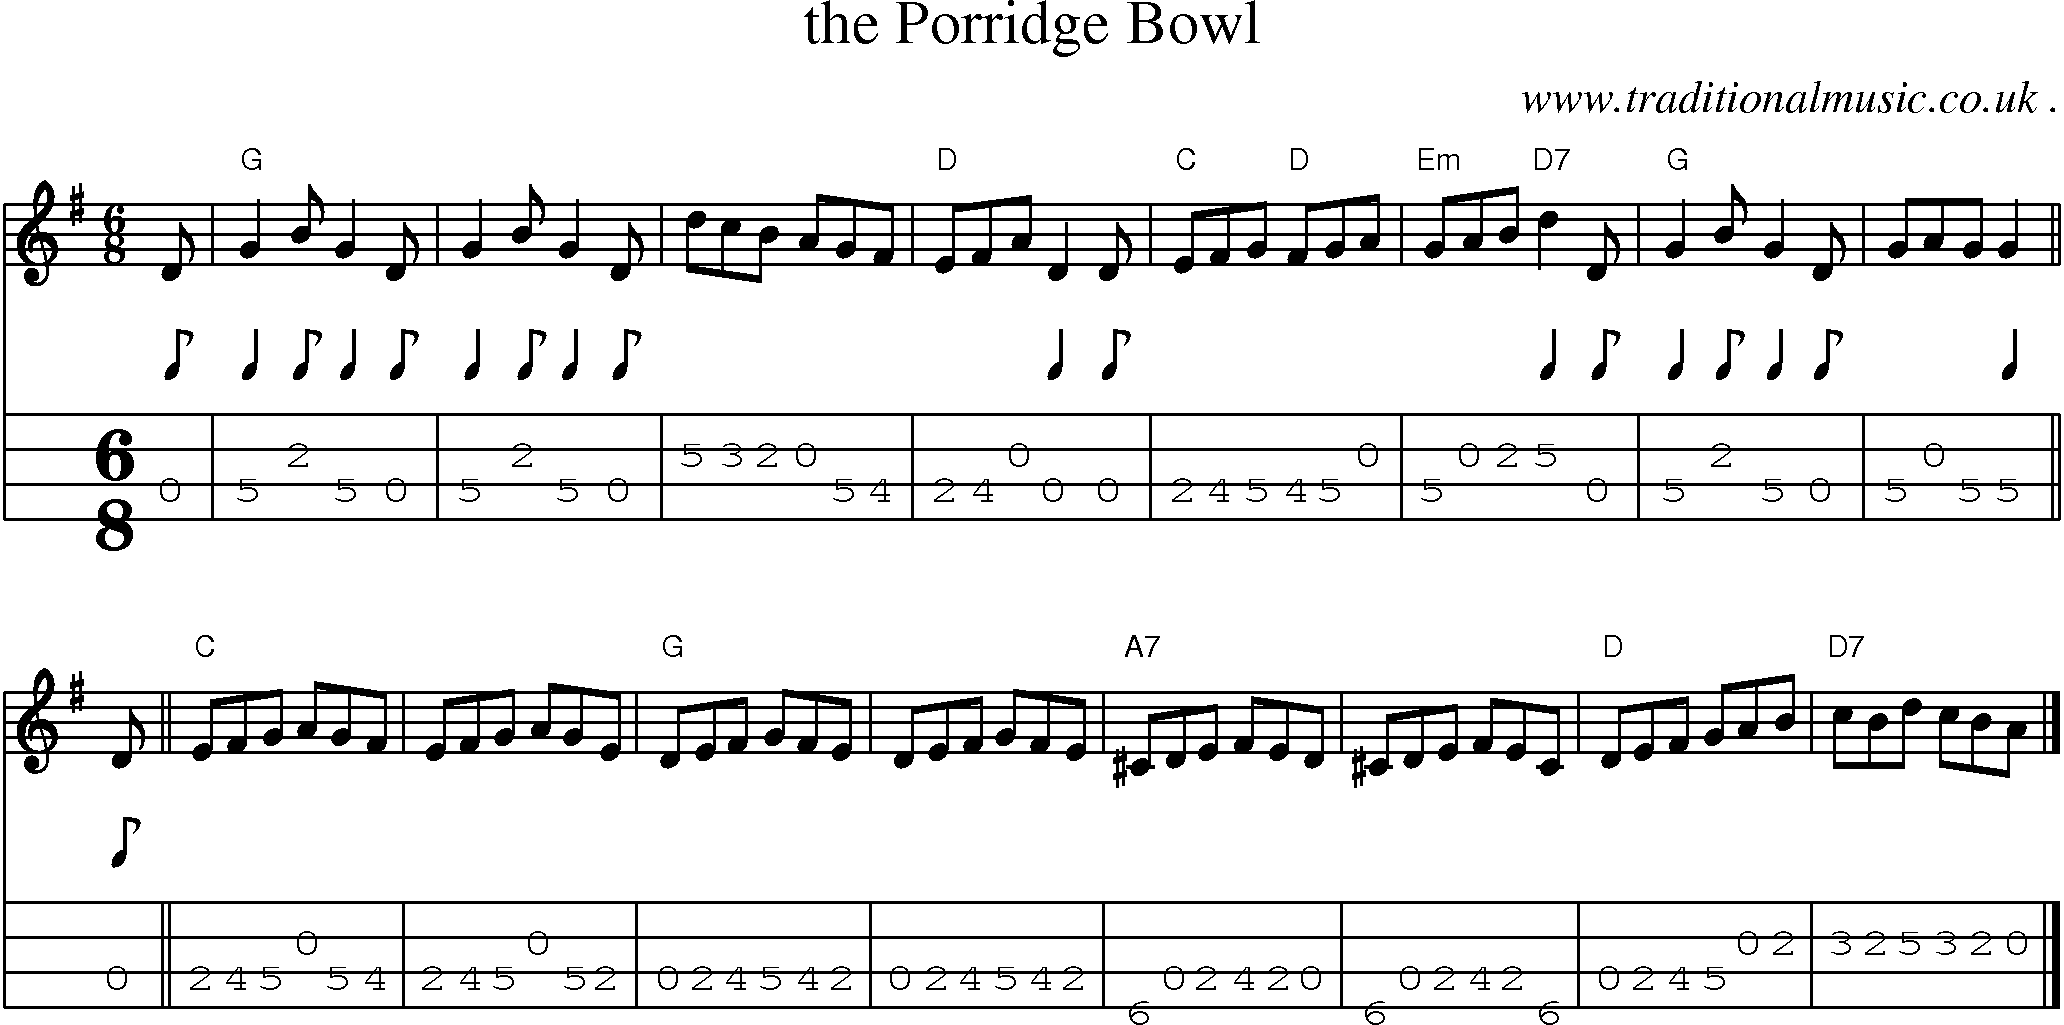 Sheet-music  score, Chords and Mandolin Tabs for The Porridge Bowl